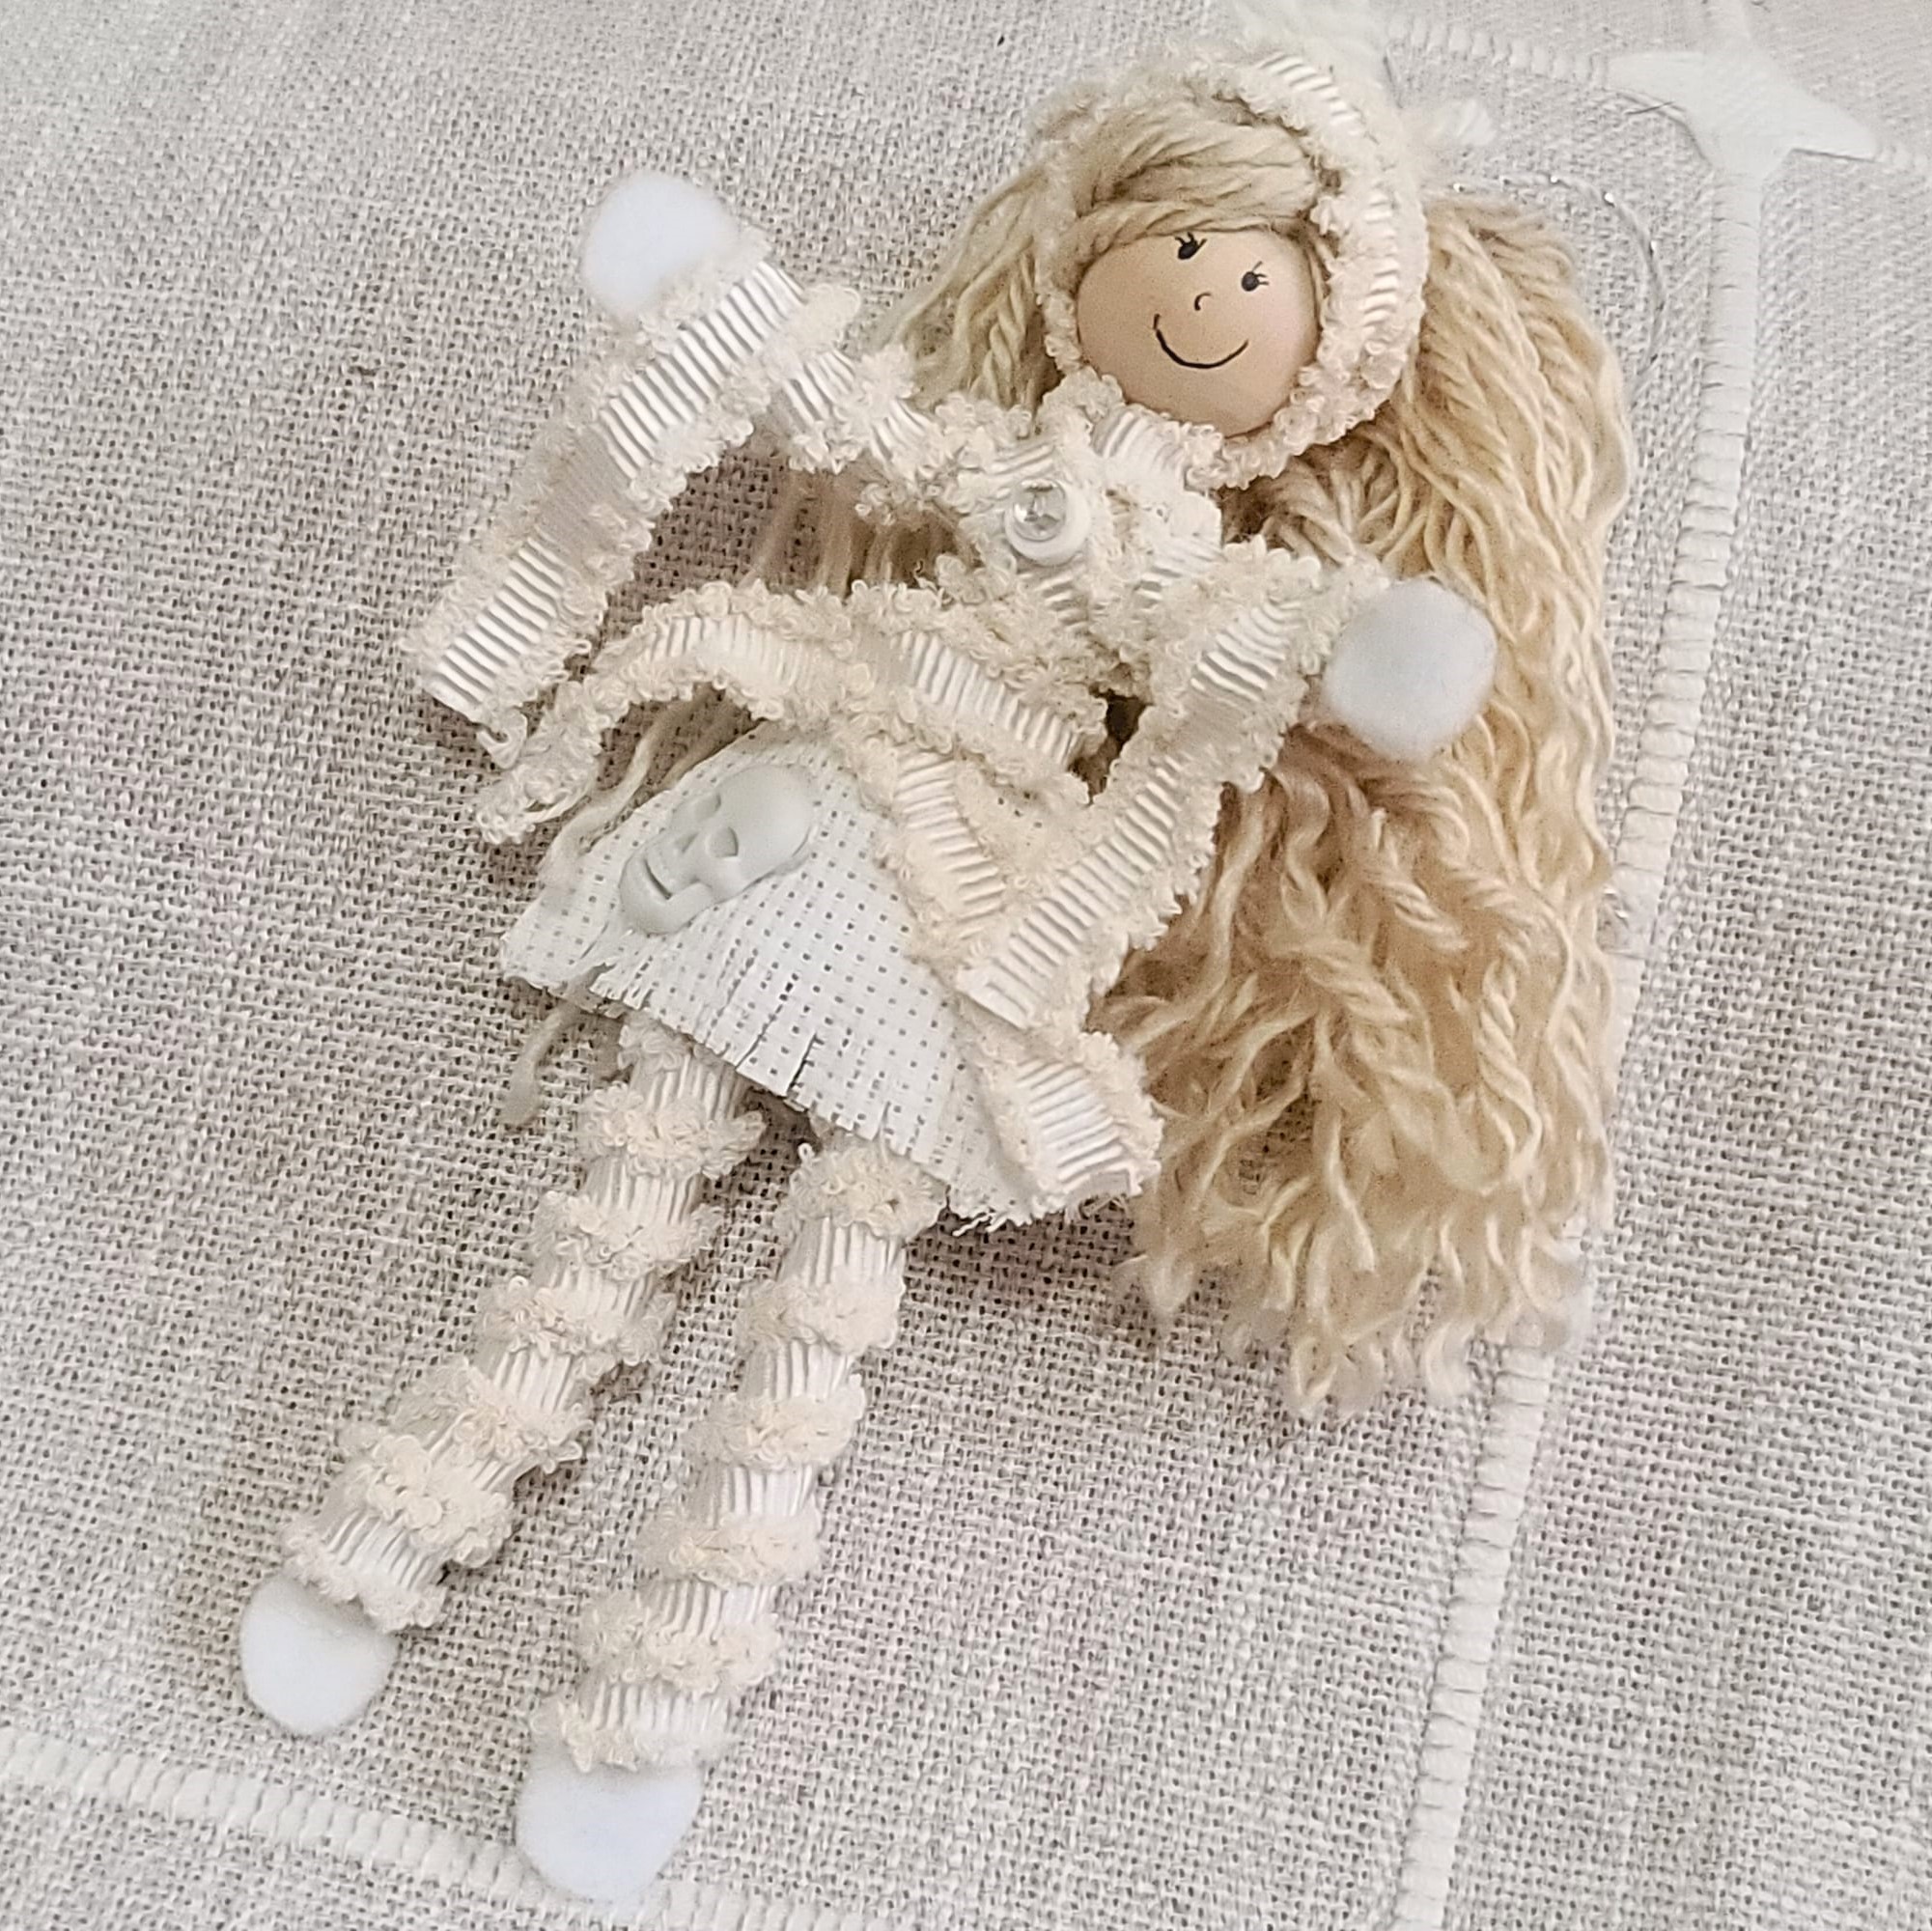 Halloween Mummy Doll - Blonde Hair